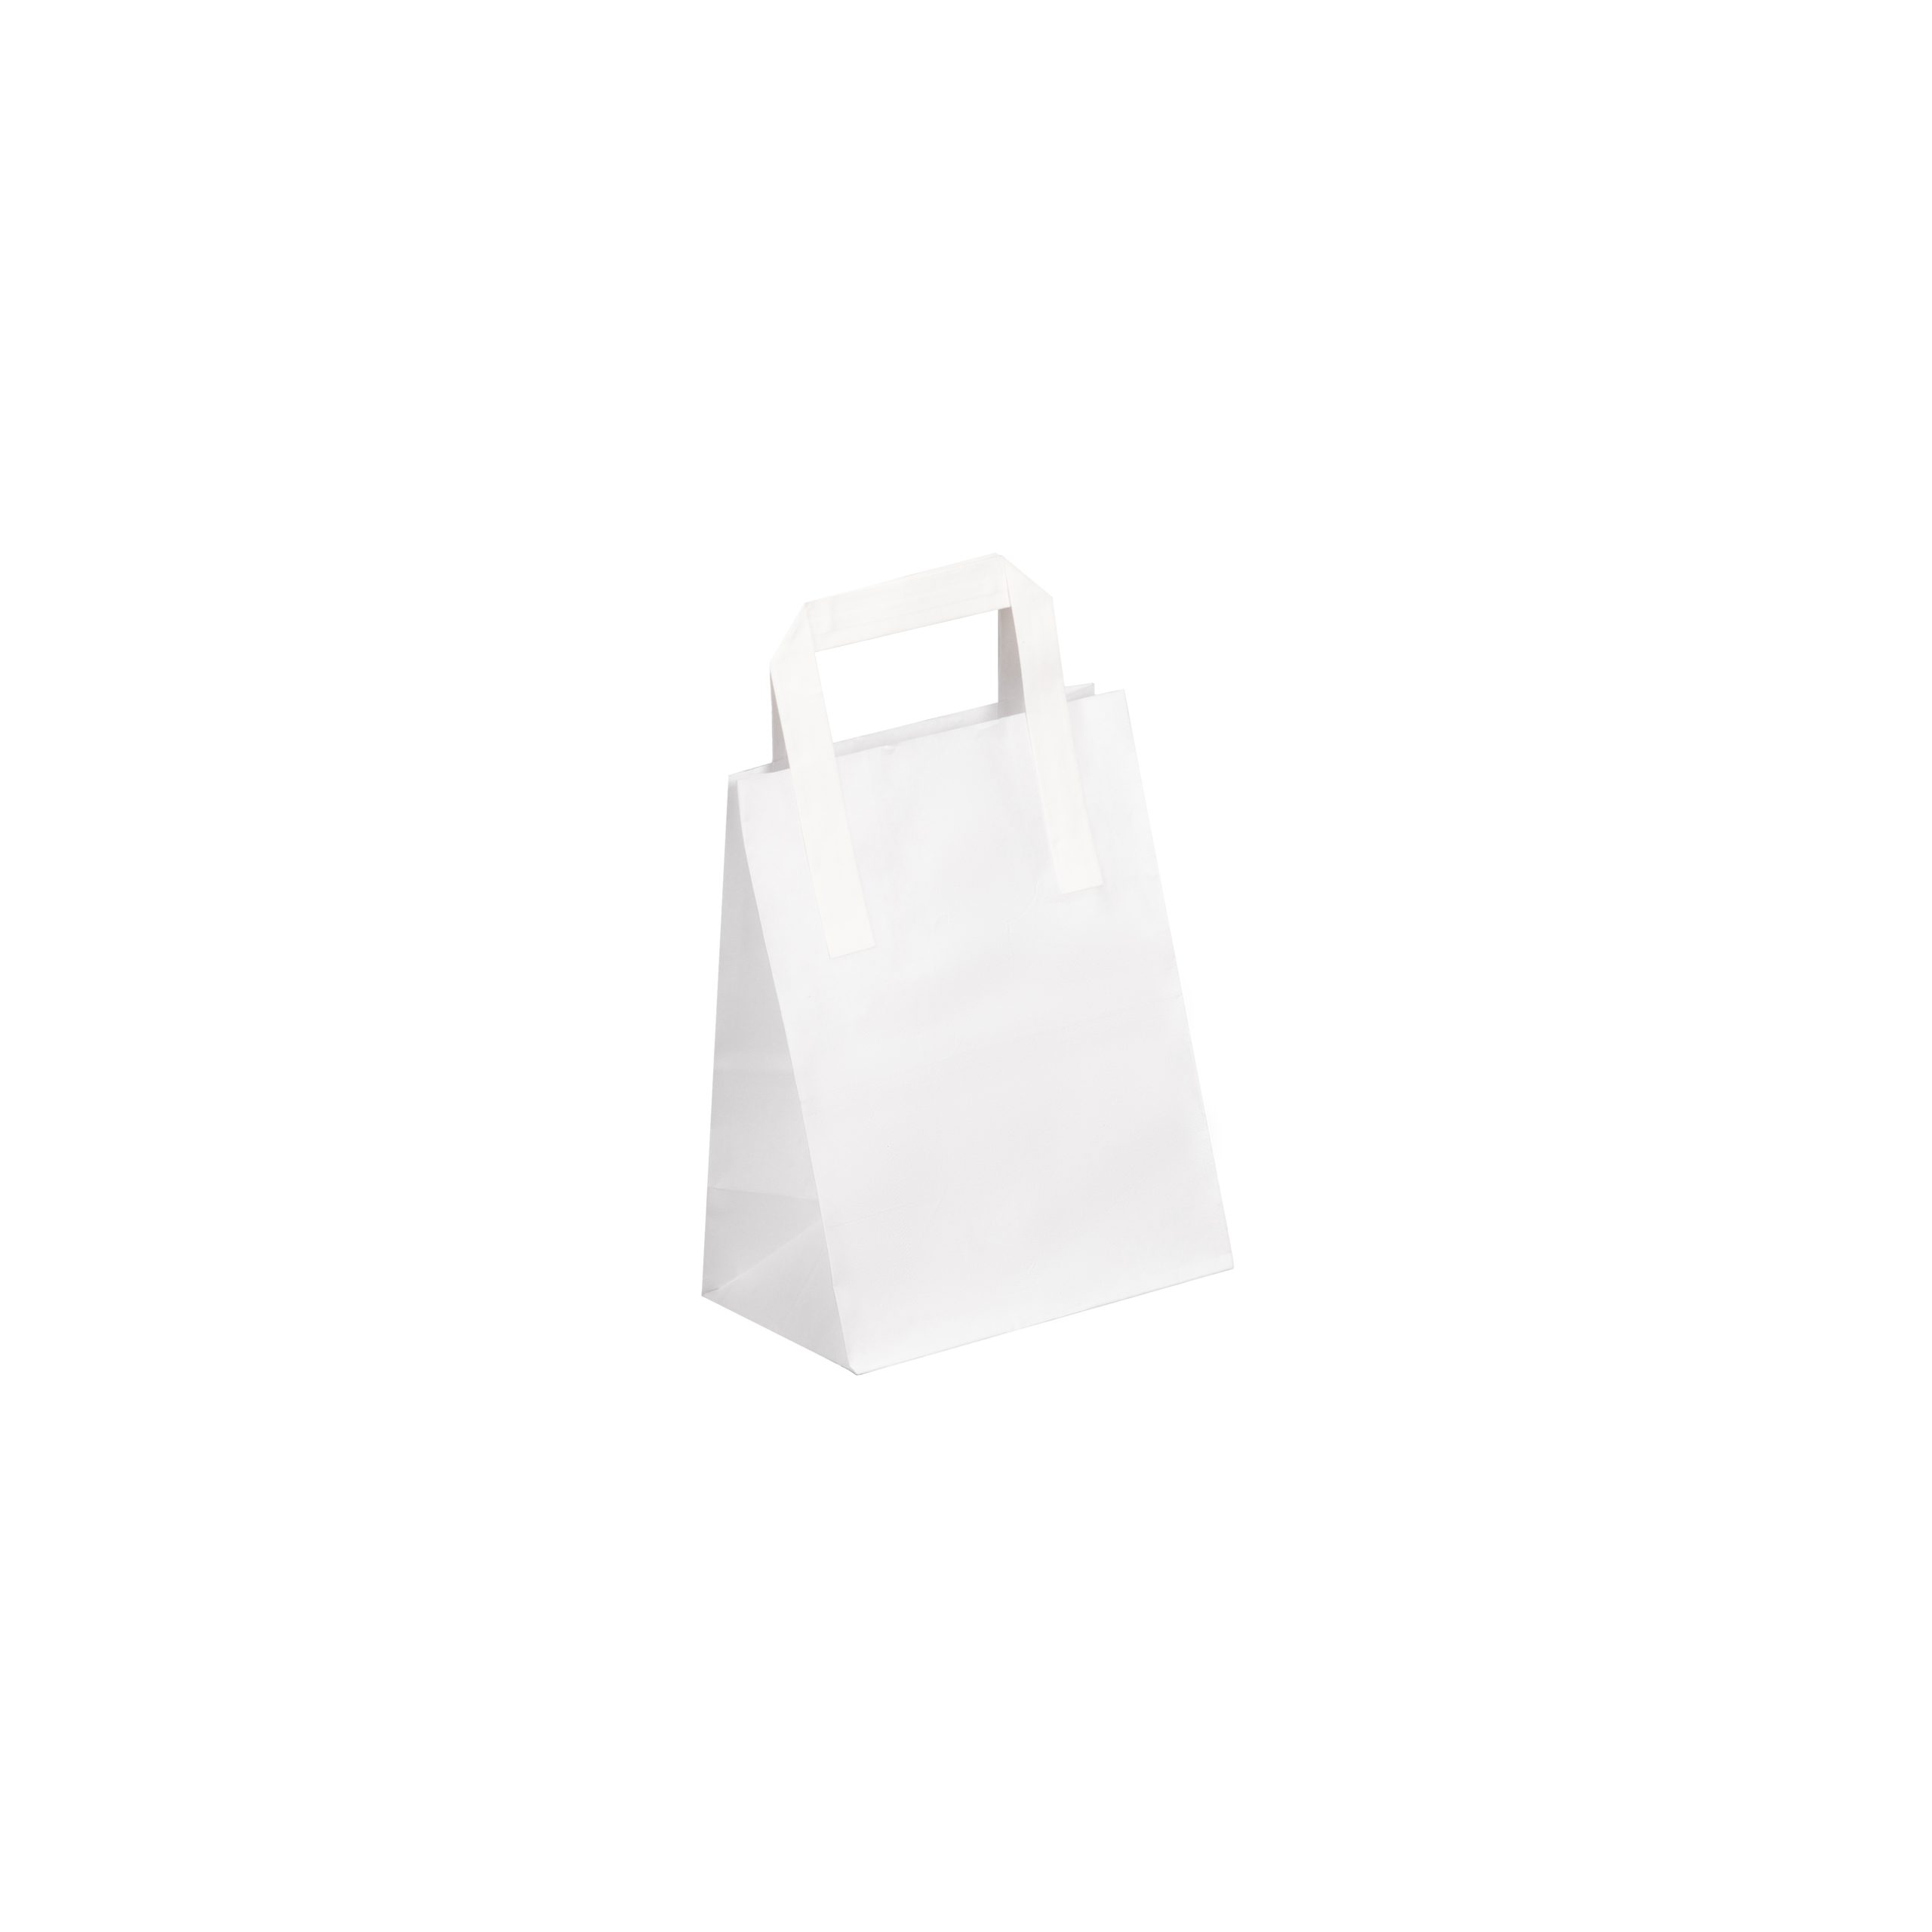 Small White Bag – 178x100x228mm